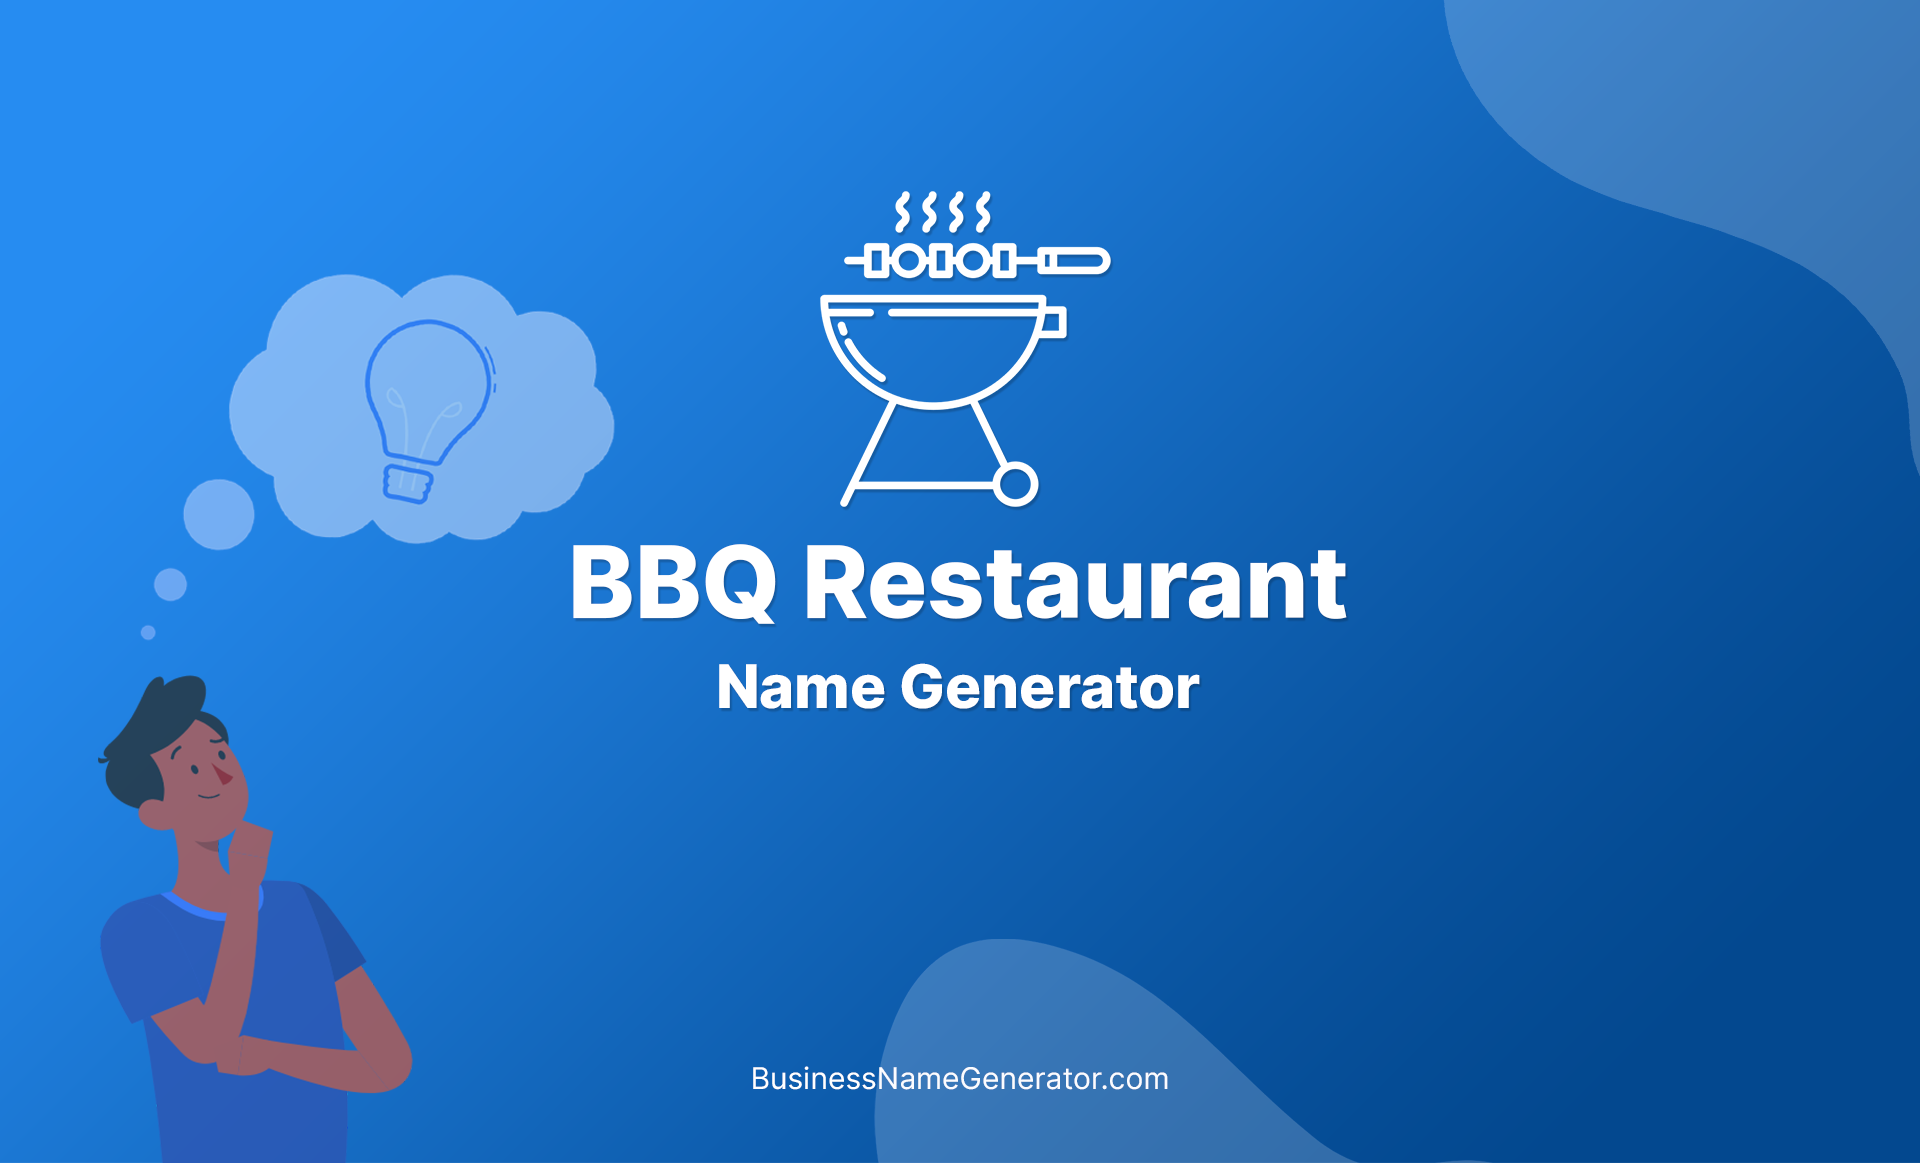 BBQ Restaurant Name Generator